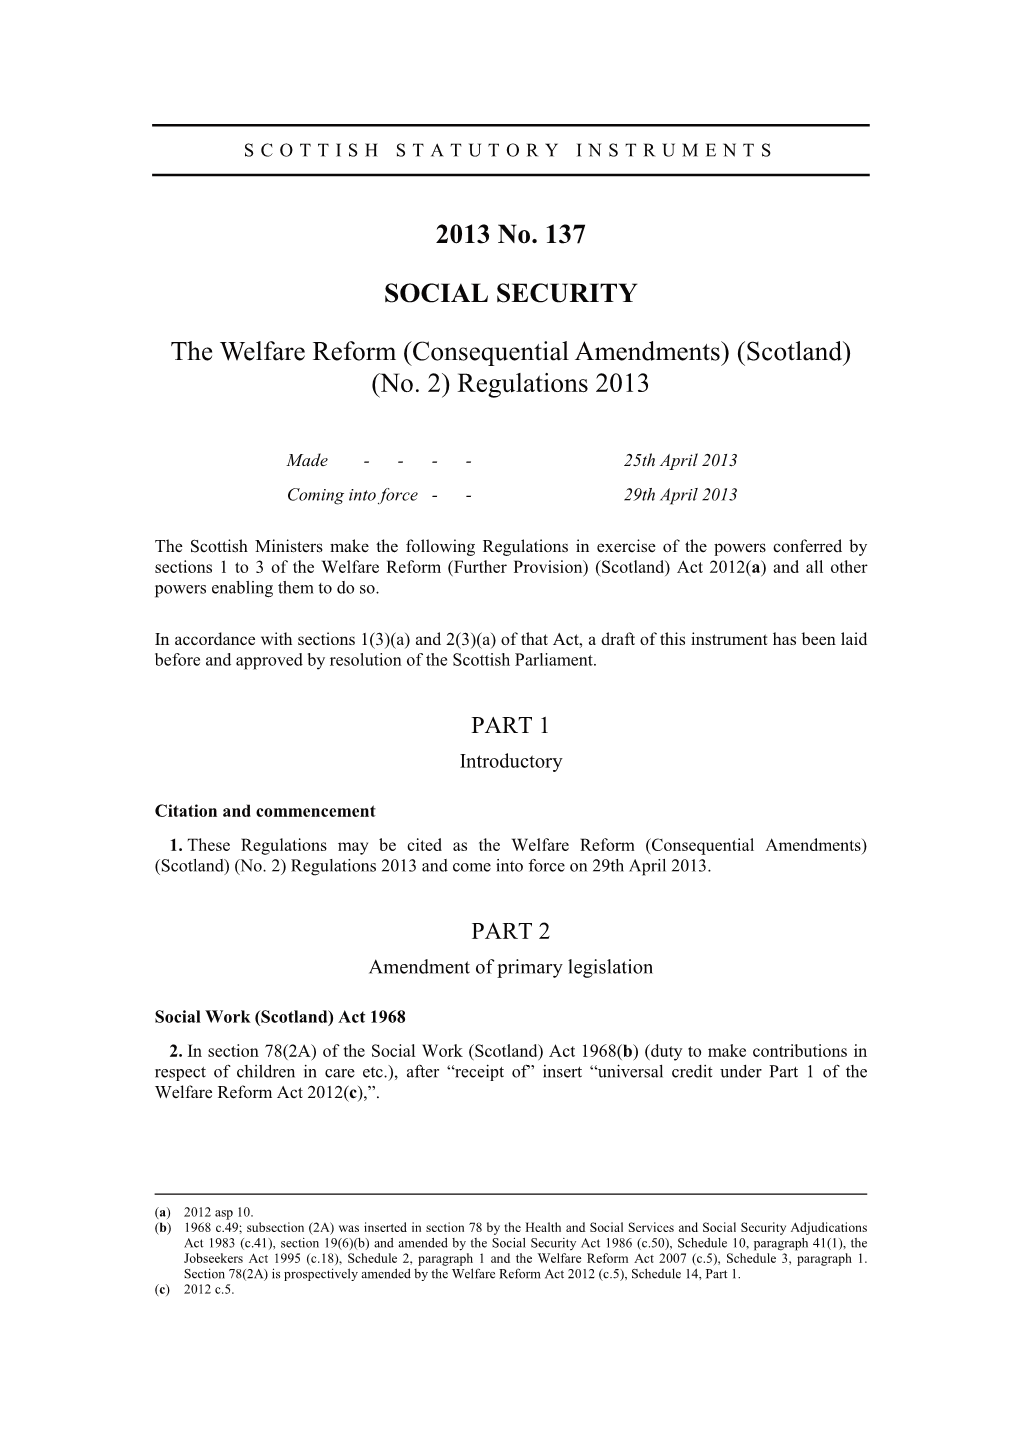 2013 No. 137 SOCIAL SECURITY the Welfare Reform (Consequential Amendments) (Scotland) (No. 2) Regulations 2013